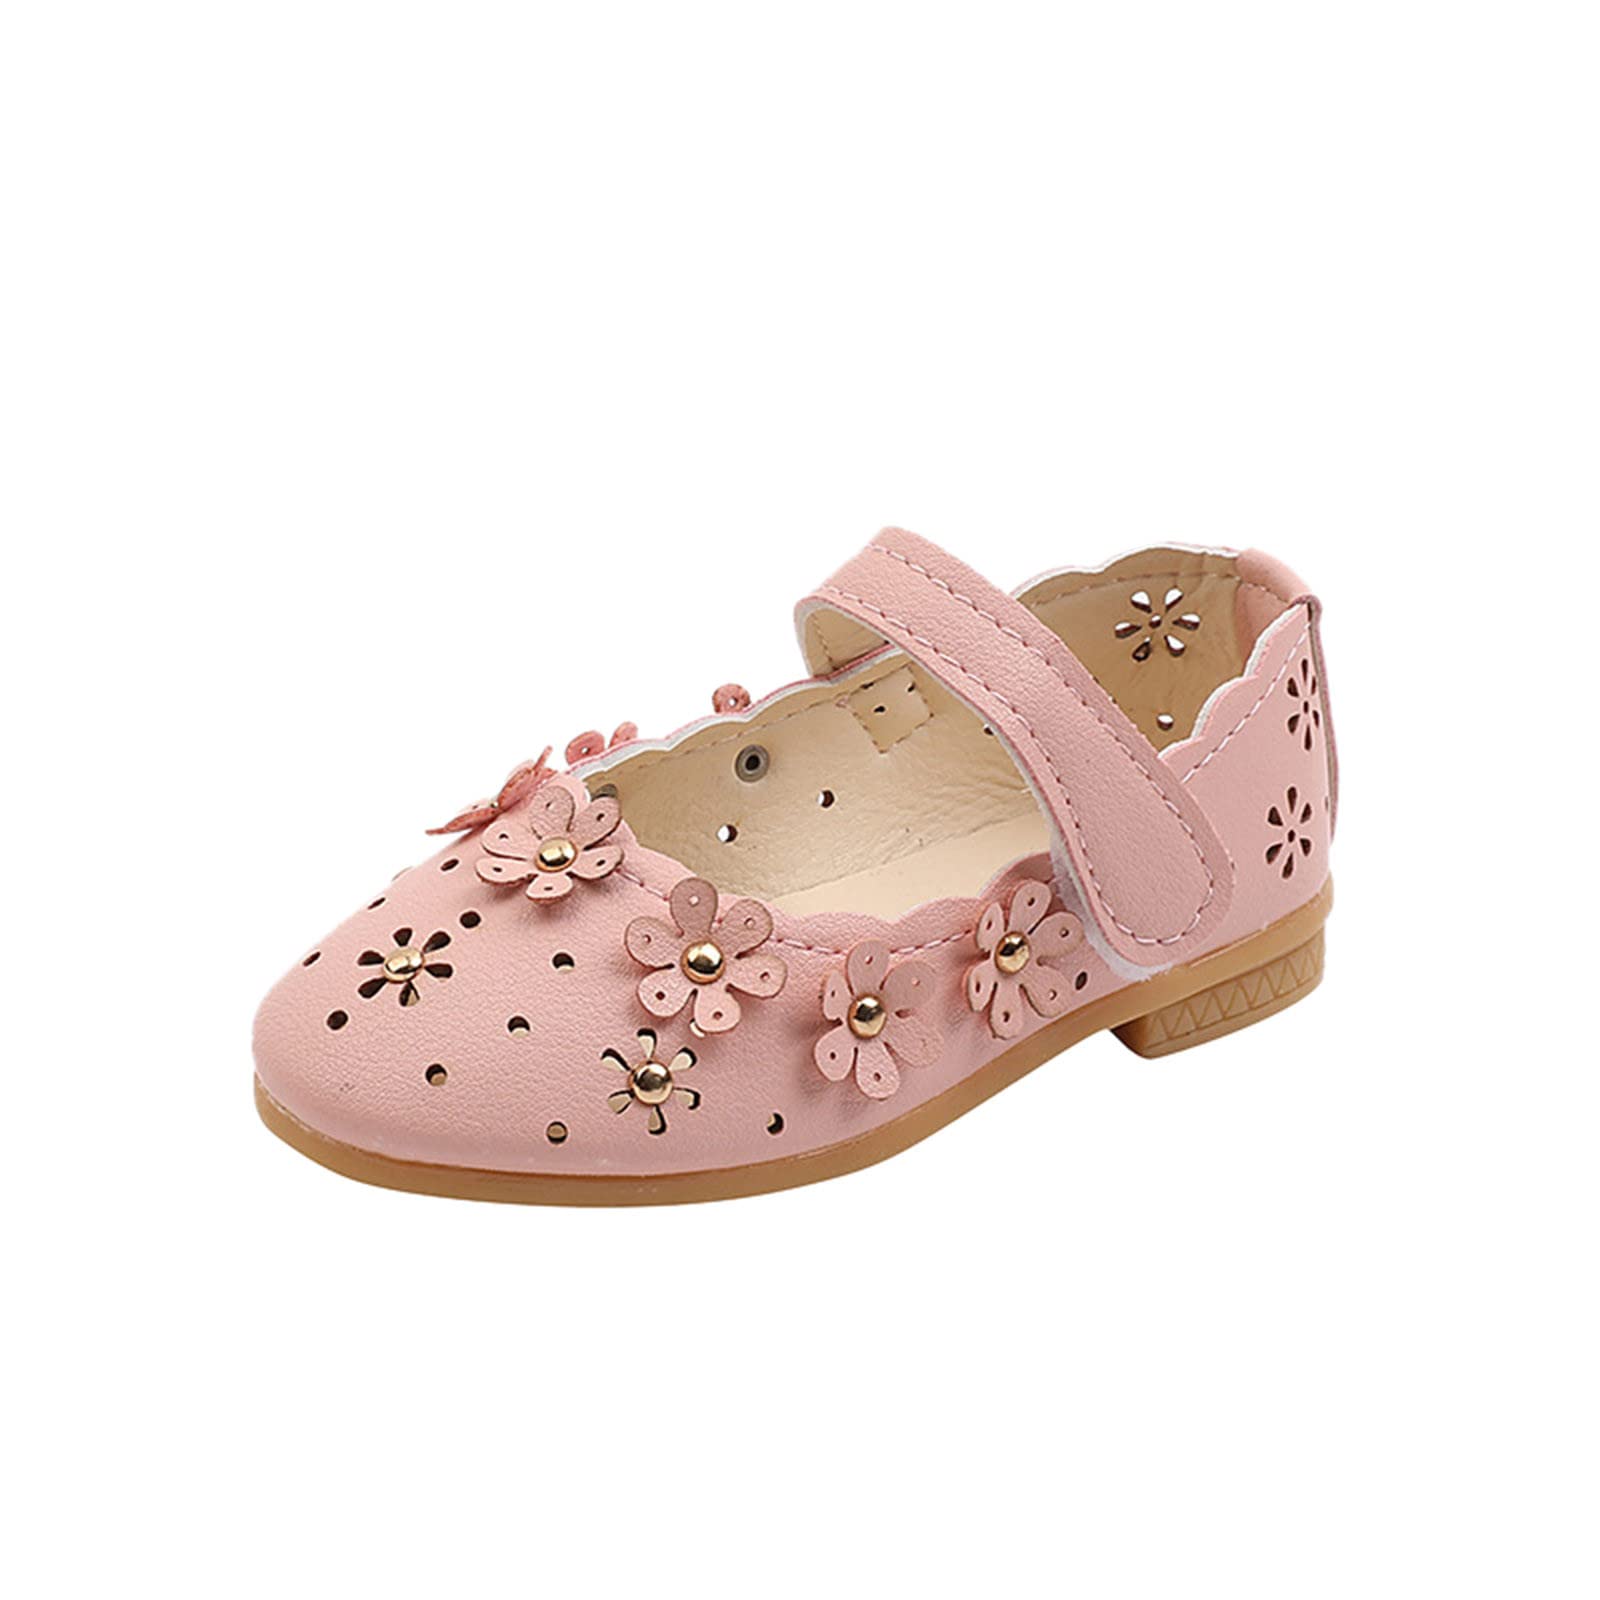 Boys High Top Tennis Shoes Girls Princess Shoes Sandal Flower Shoes Hollow Flower Shoes Tennis for Baby Girl